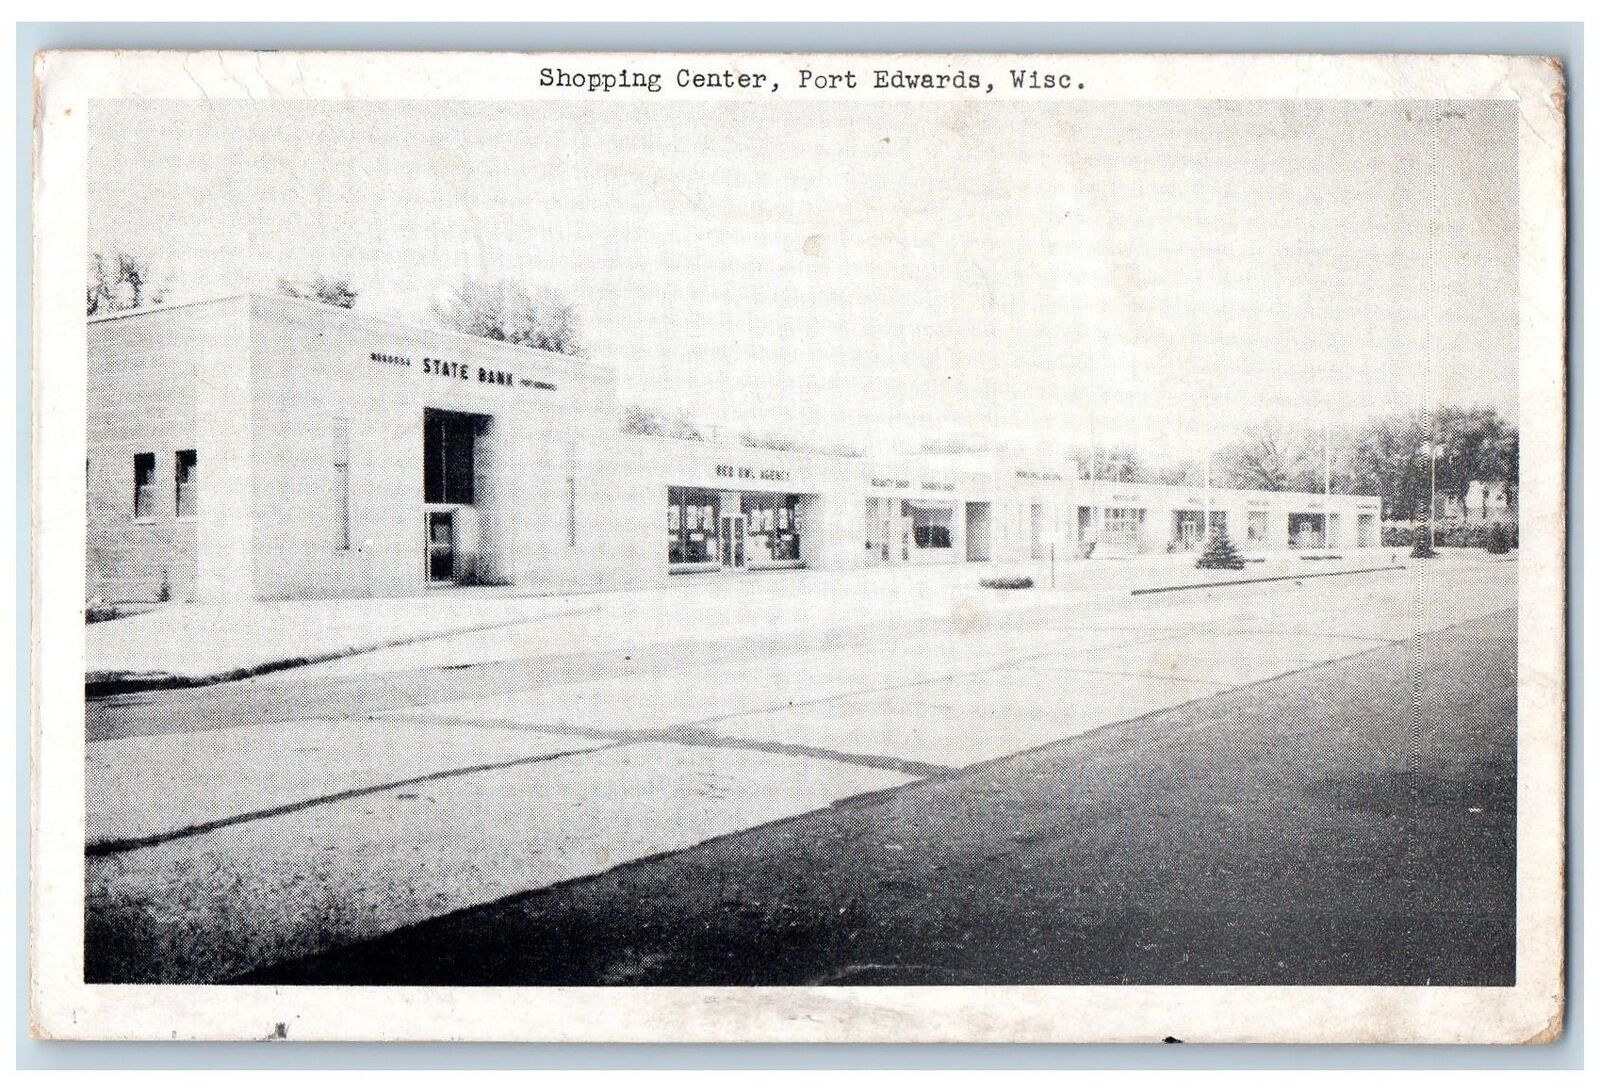 Port Edwards Wisconsin WI Postcard Shopping Center State Bank Agency Scene  1940